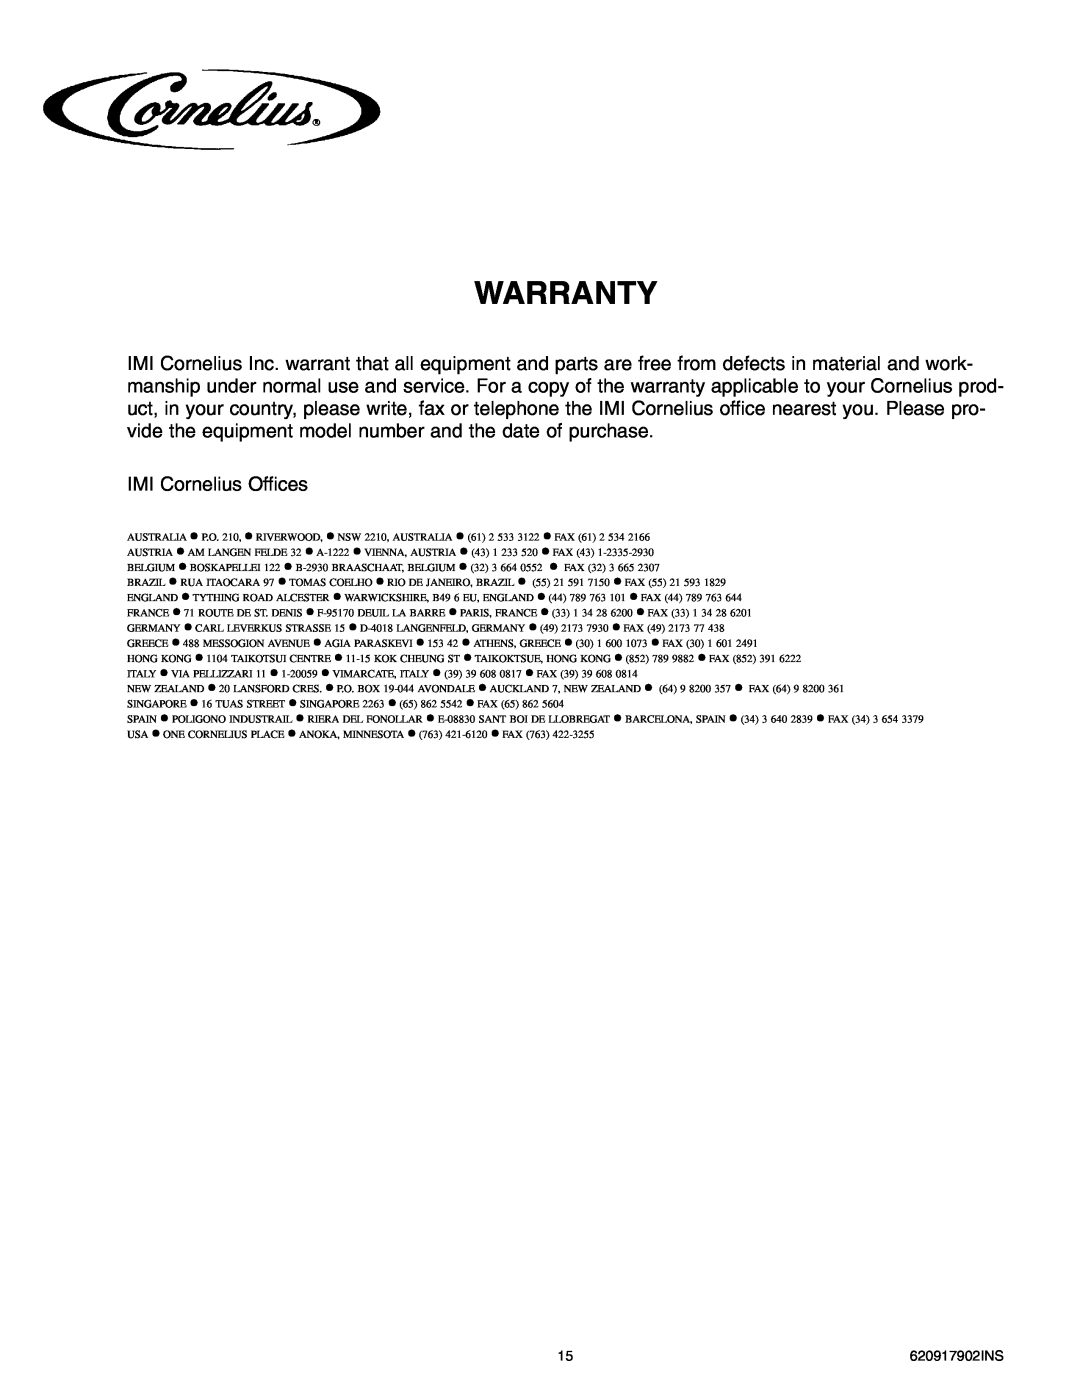 Cornelius ENDURO-175 installation manual Warranty, IMI Cornelius Offices 